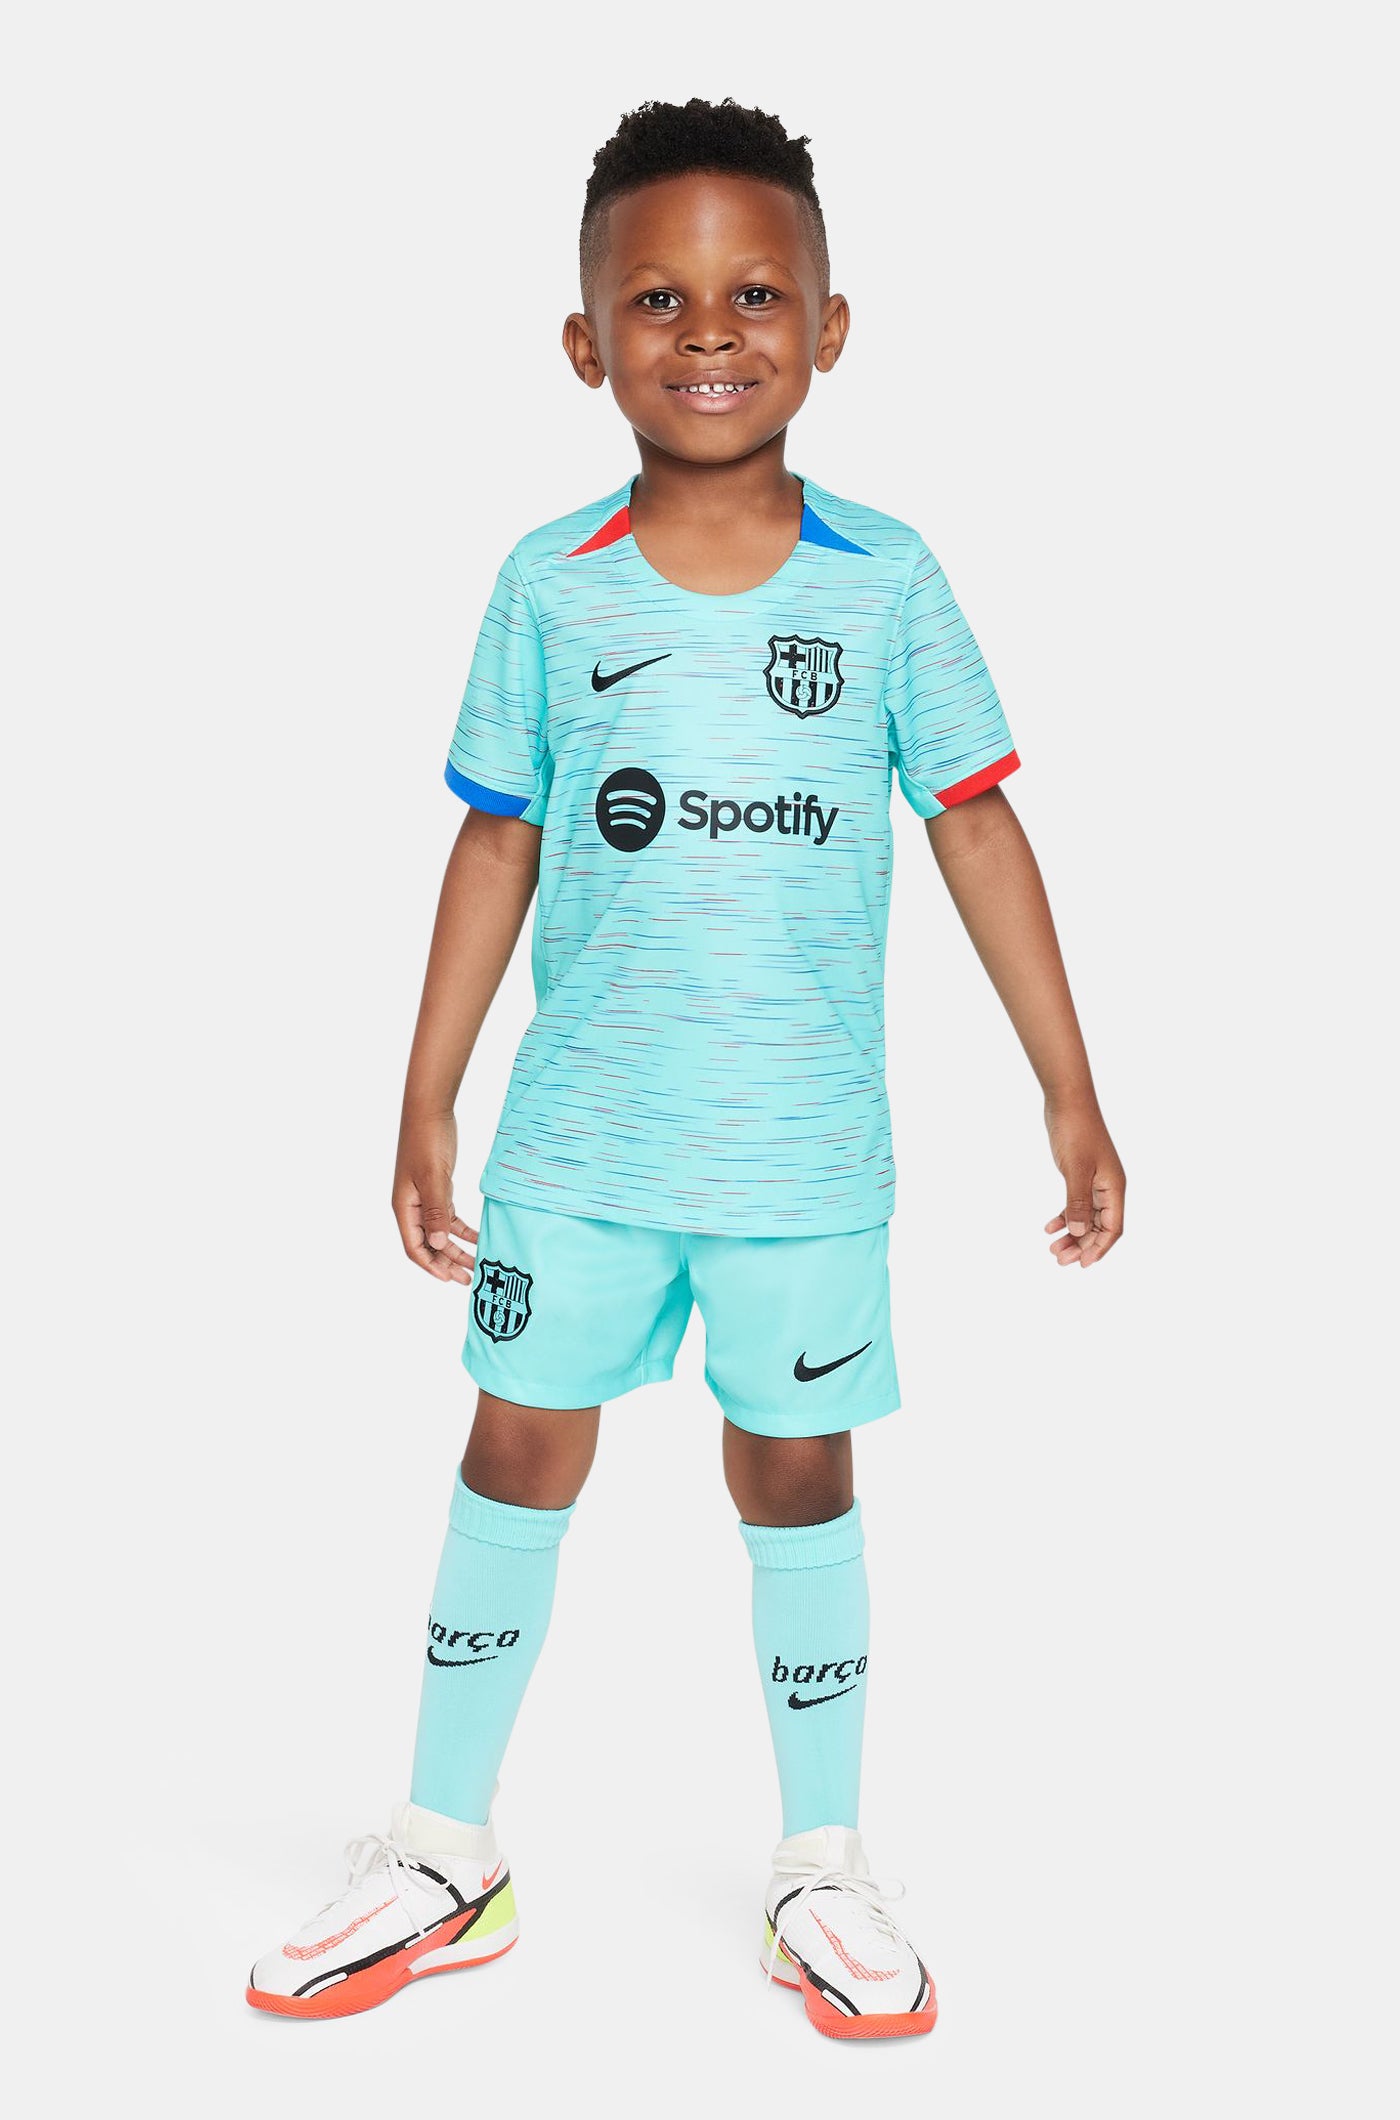 FC Barcelona third Kit 23/24 – Younger Kids  - ROLFÖ